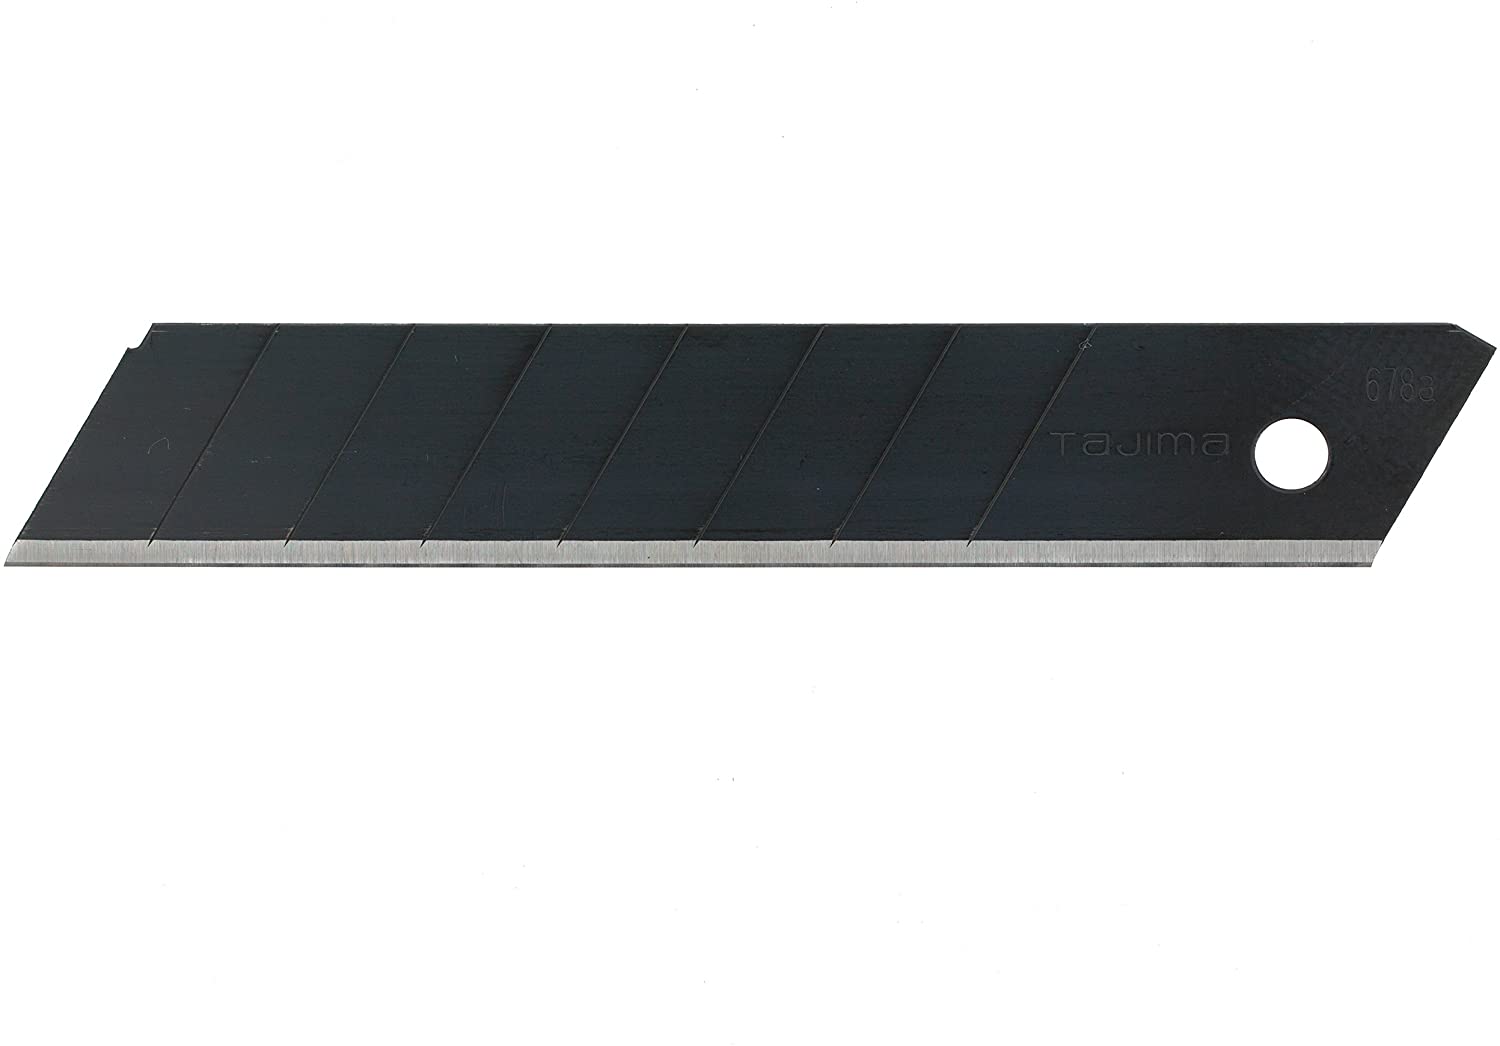 Tajima Endura Blade Snap-Off Blades Replacement Blades Cutter Blades 18 - 22 mm, LCB50RBC/K1